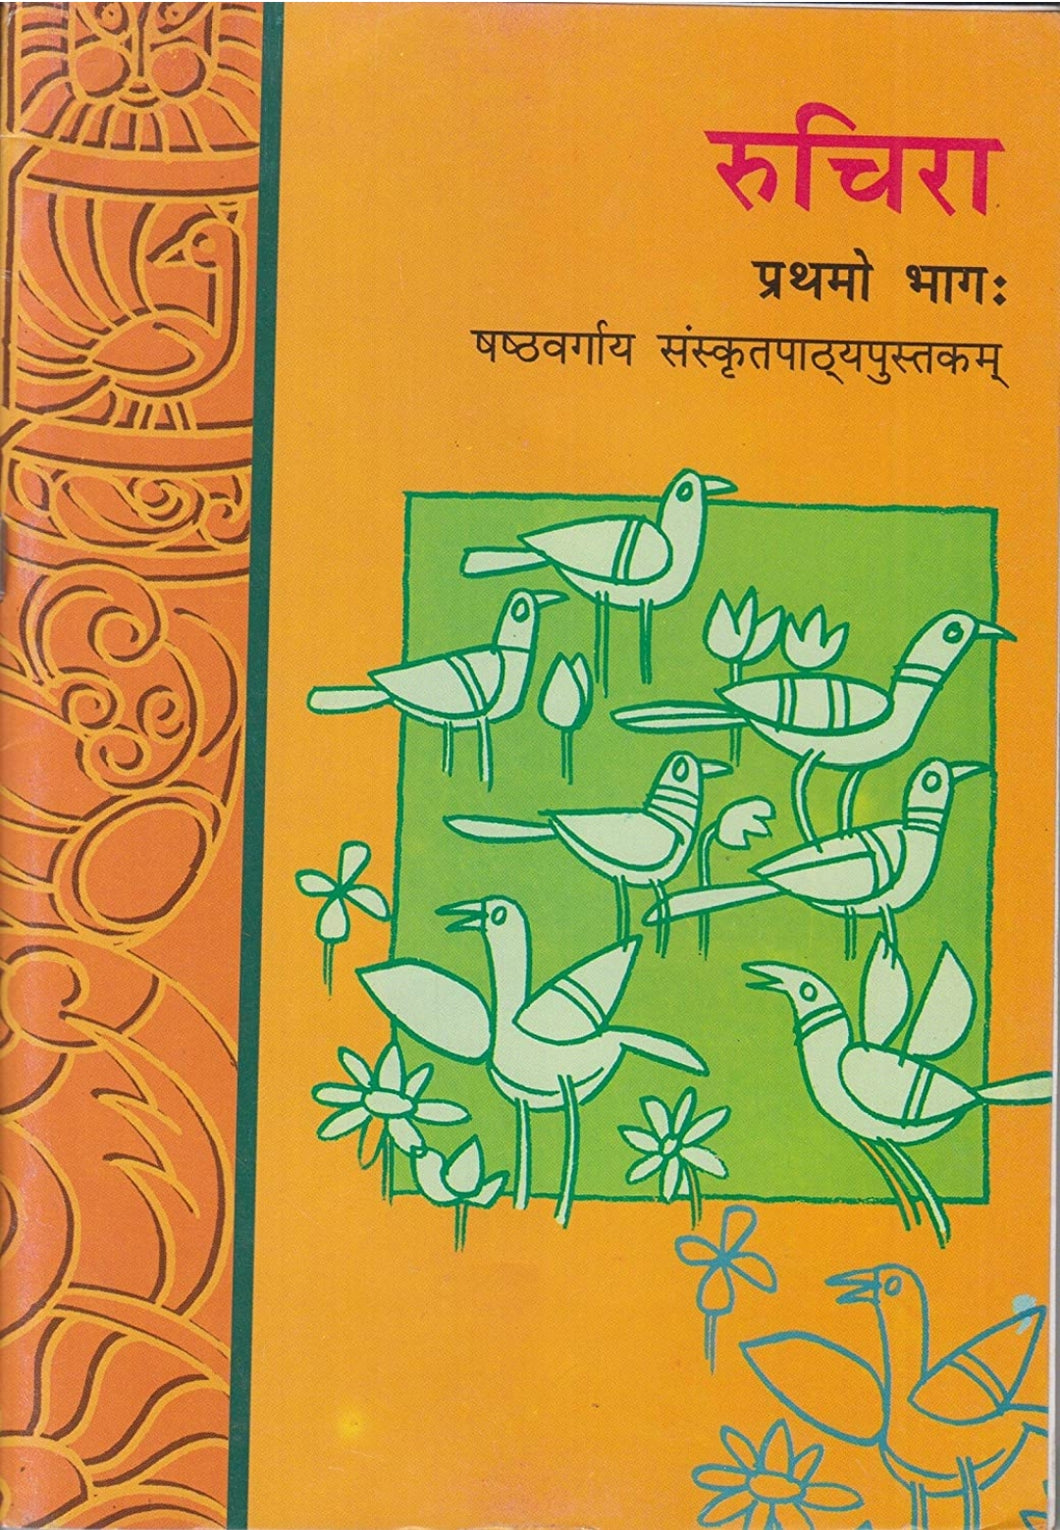 NCERT Ruchira - Prathamo Bhag - Class 6 - latest edition as per NCERT/CBSE - Booksfy